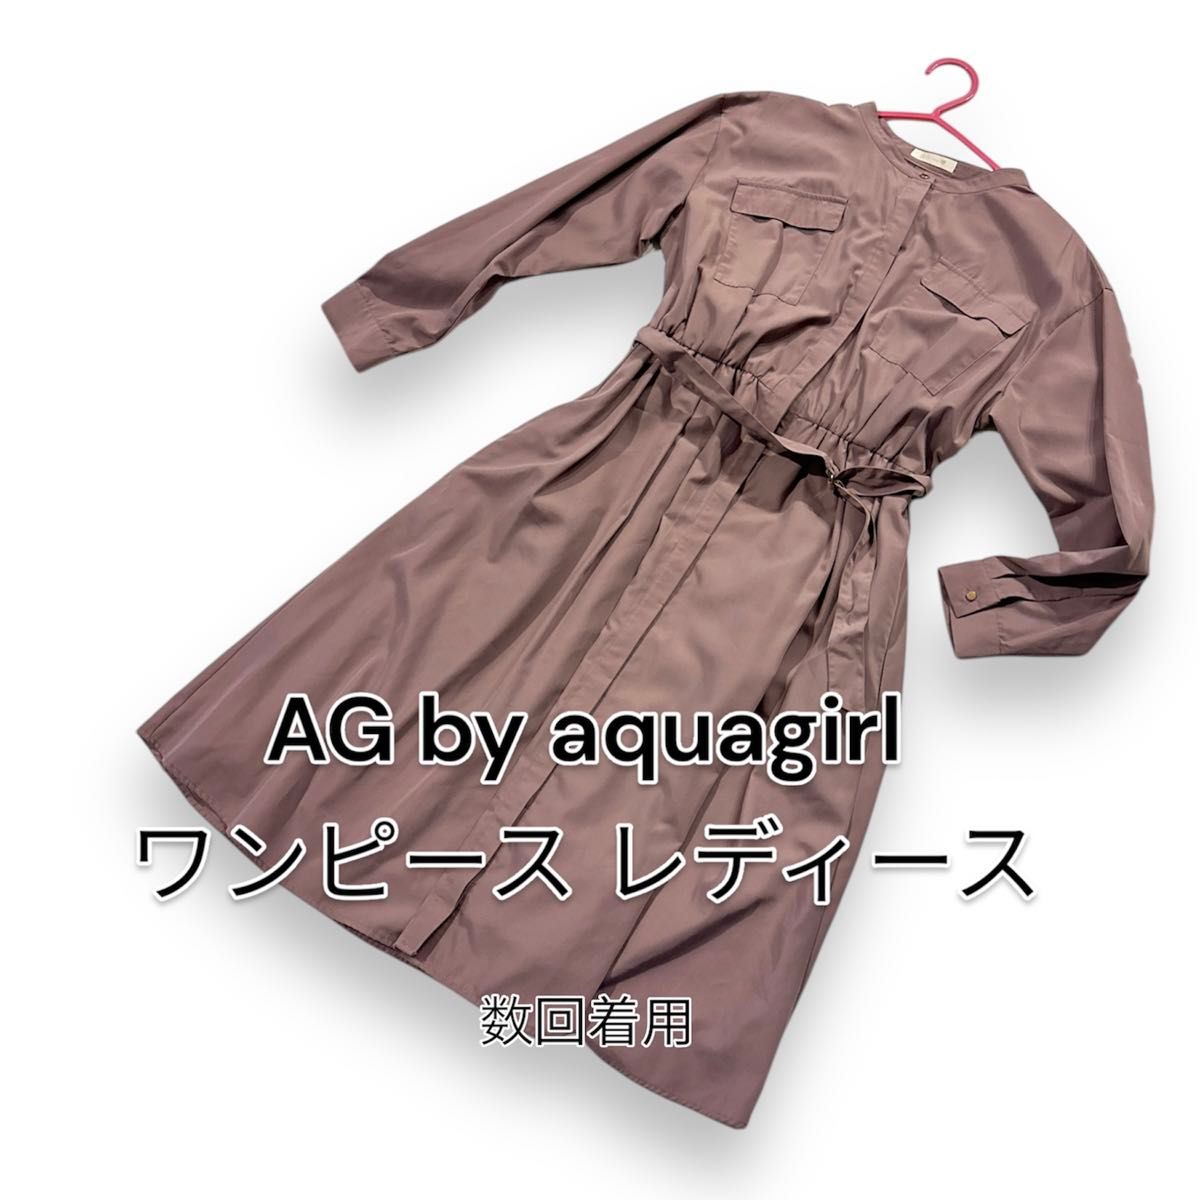 AG by aquagirl ワンピース レディース ワールド 春 秋 女性 ピンク パープル 綺麗めワンピ 長袖  マキシ丈